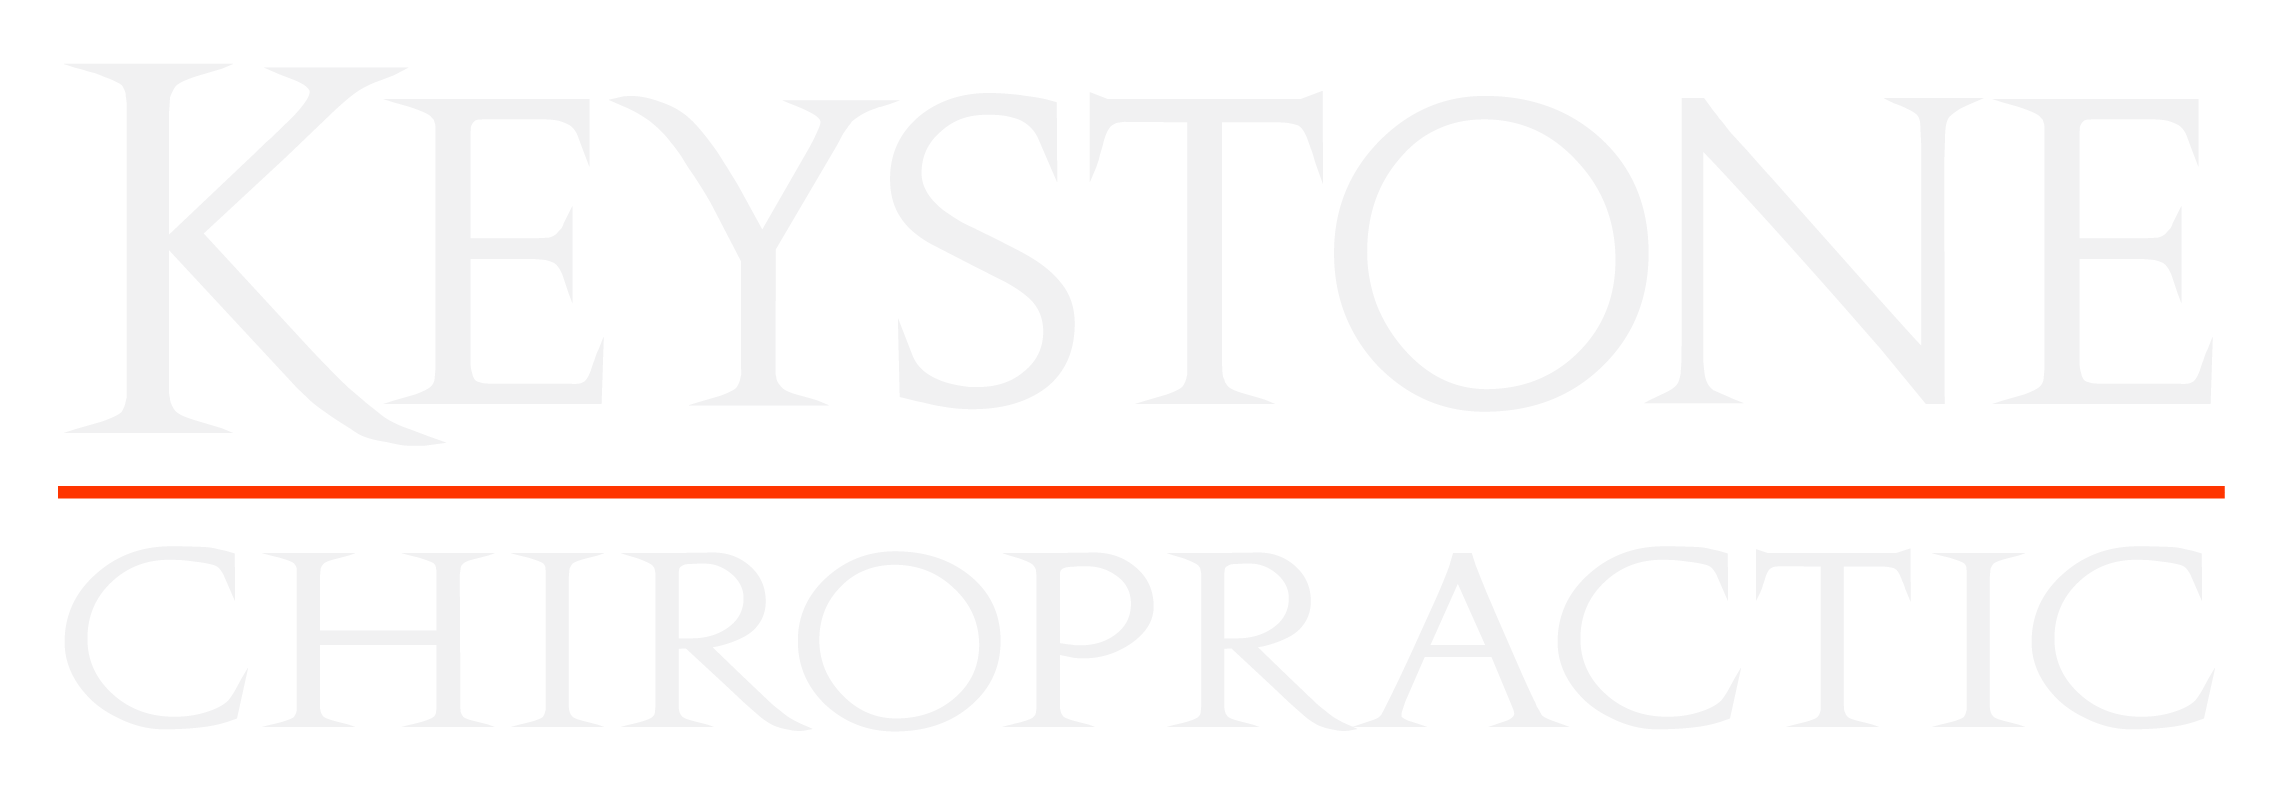 Keystone Chiropractic